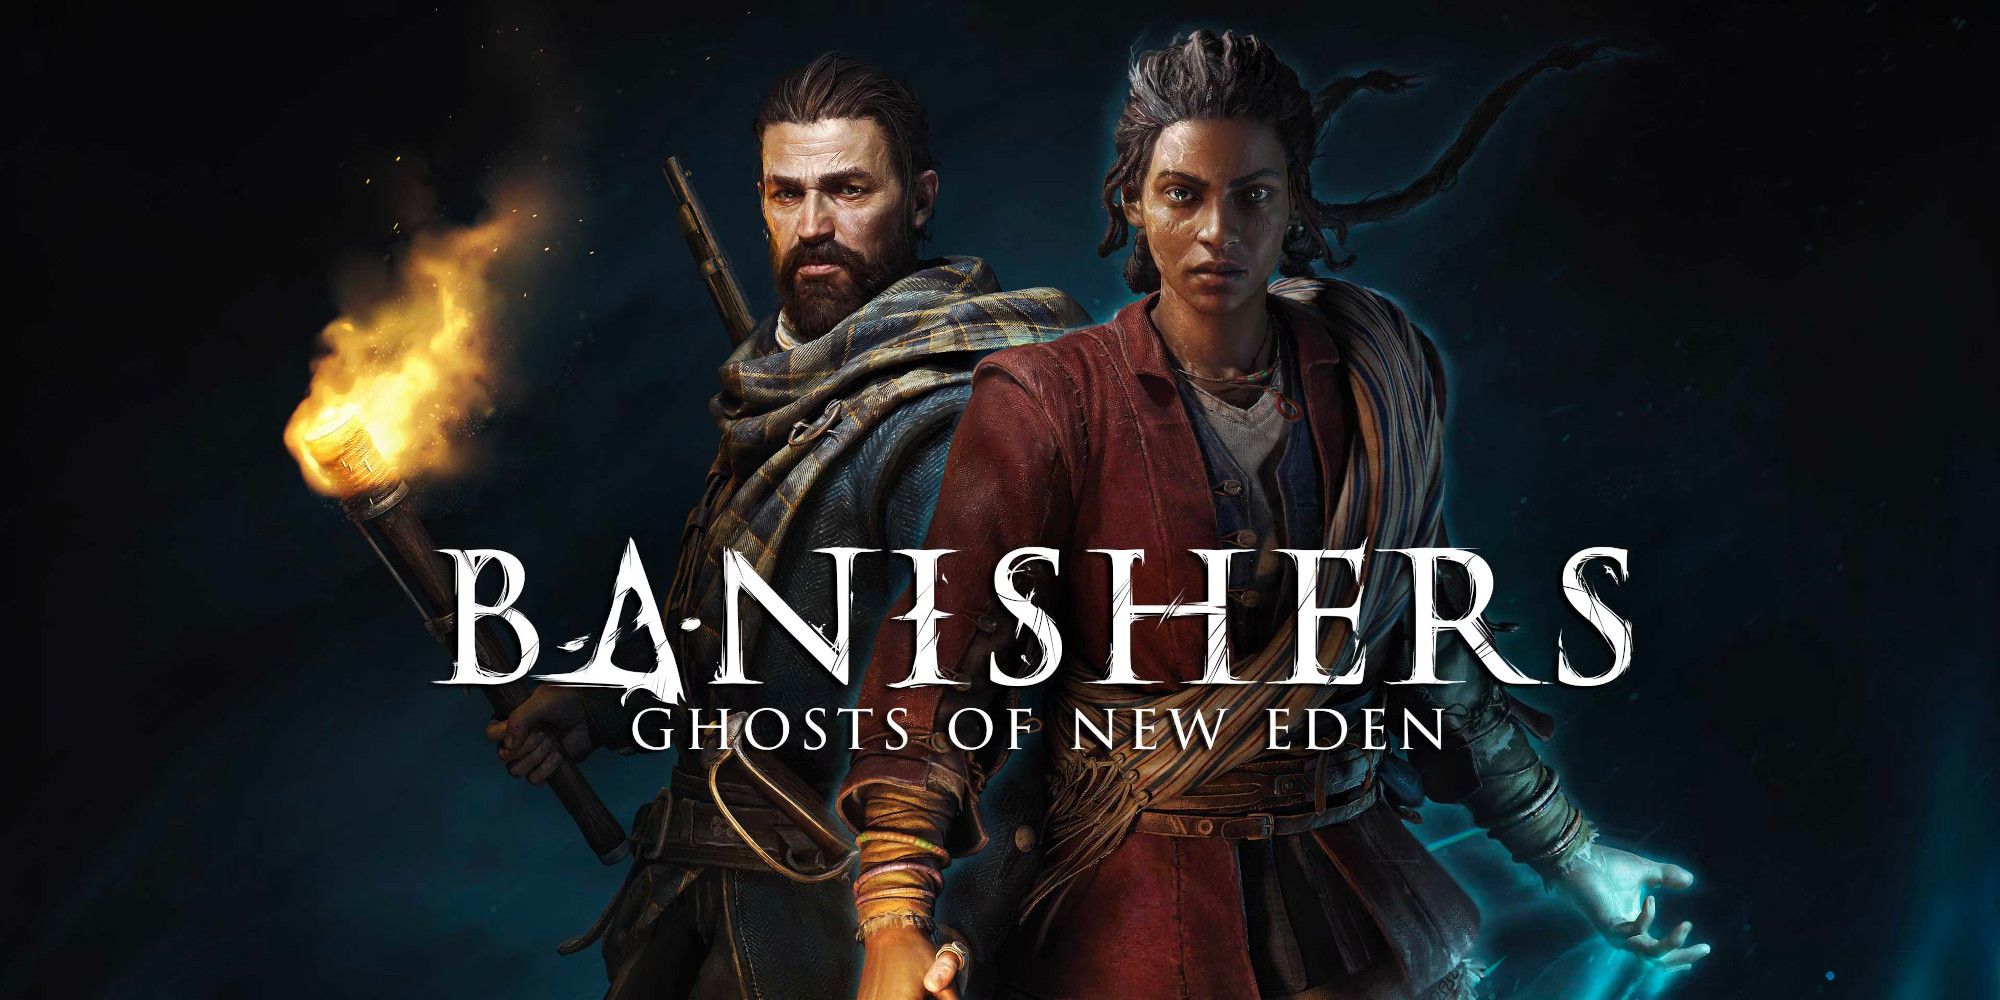 Reseña de Banishers: Ghosts Of New Eden: “Un juego de rol de acción interesante e innovador”